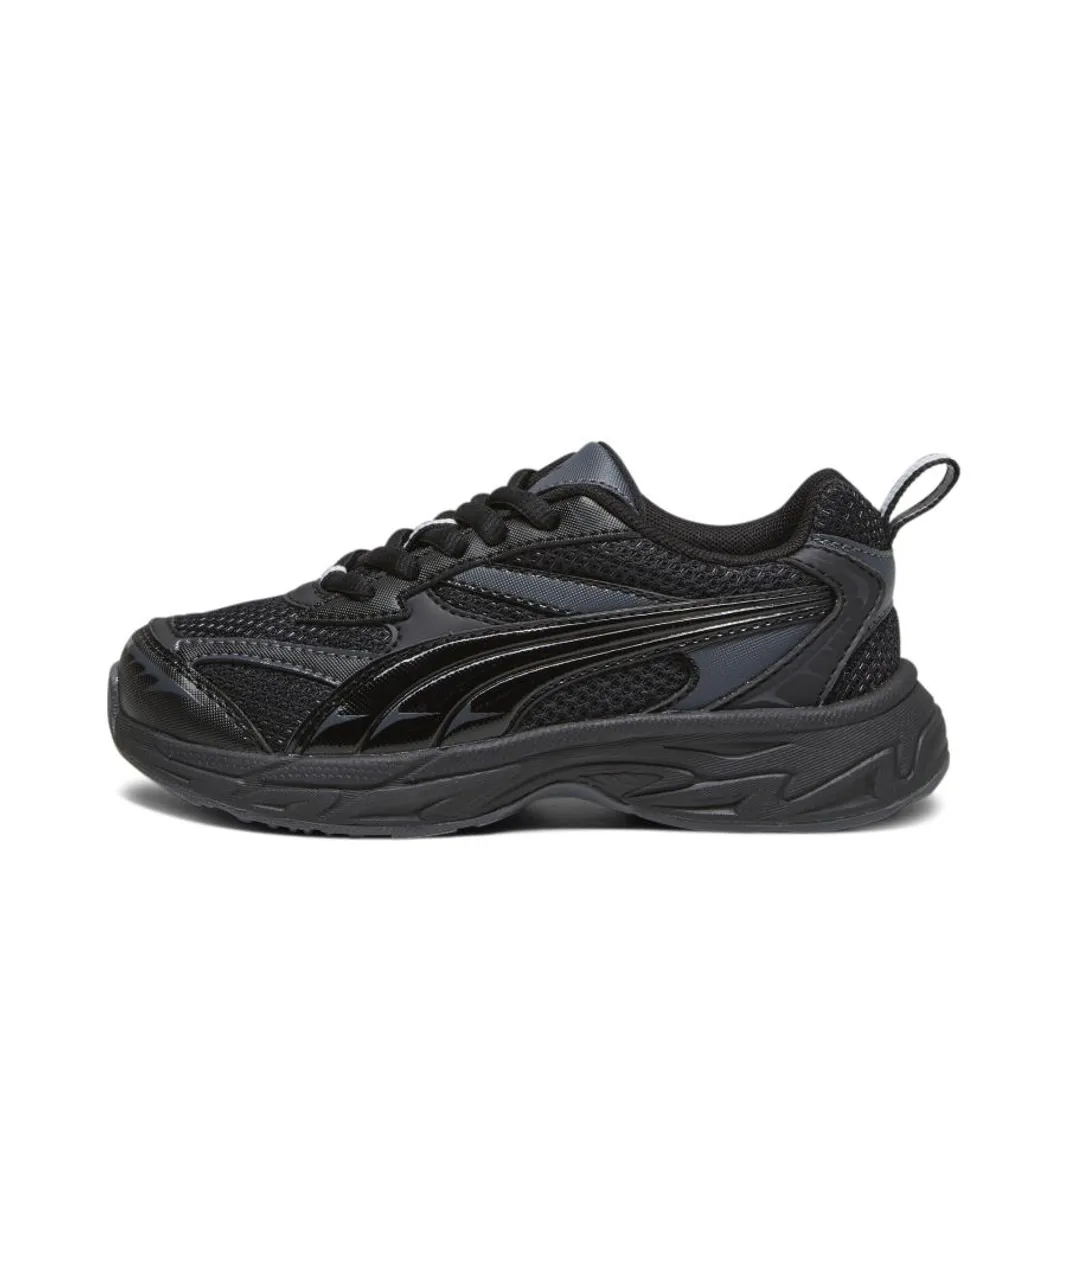 Puma Childrens Unisex Morphic Basic Sneakers Trainers - Black